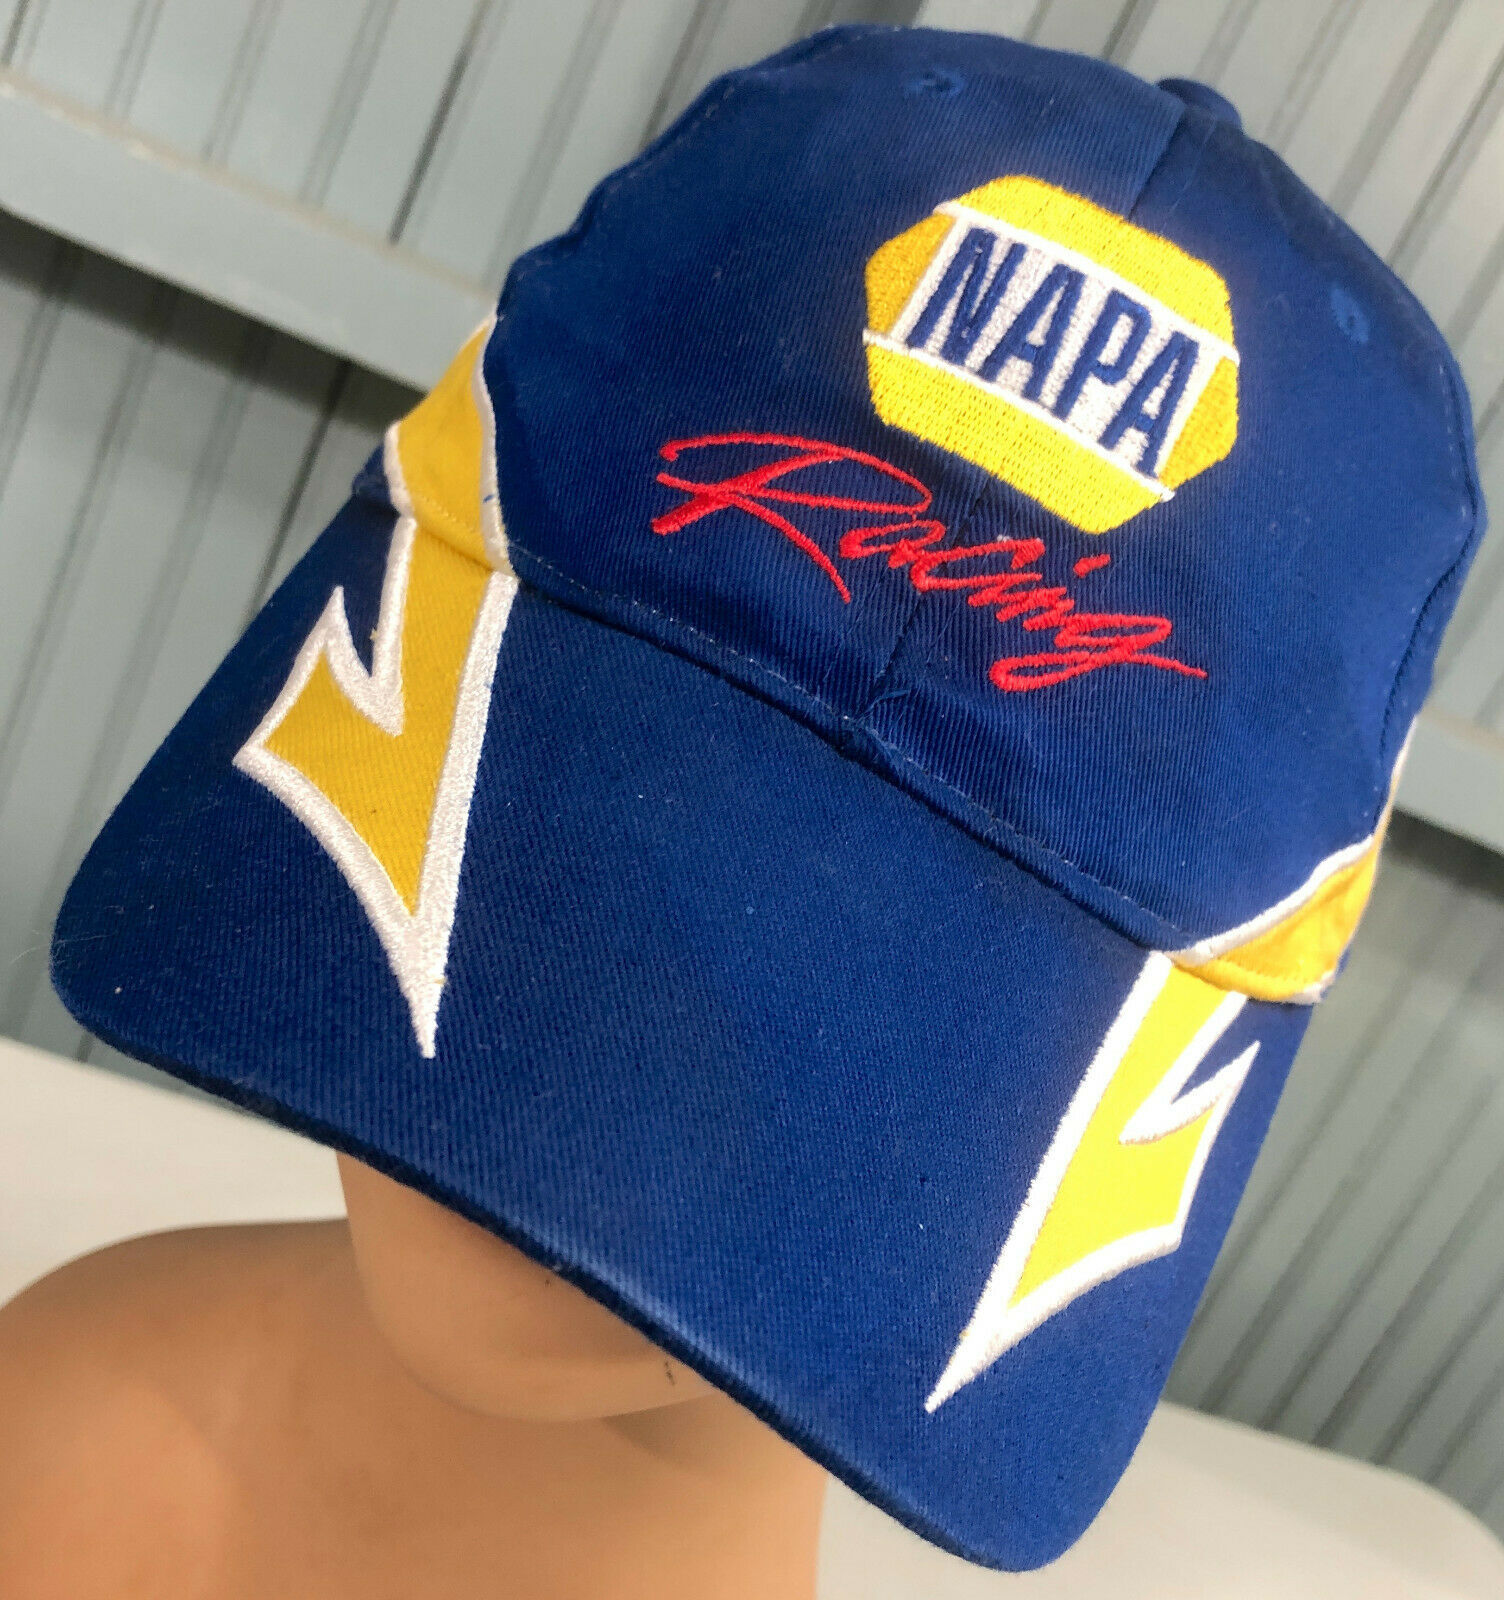 Primary image for NAPA Waltrip Racing Nascar Adjustable Baseball Hat Cap 